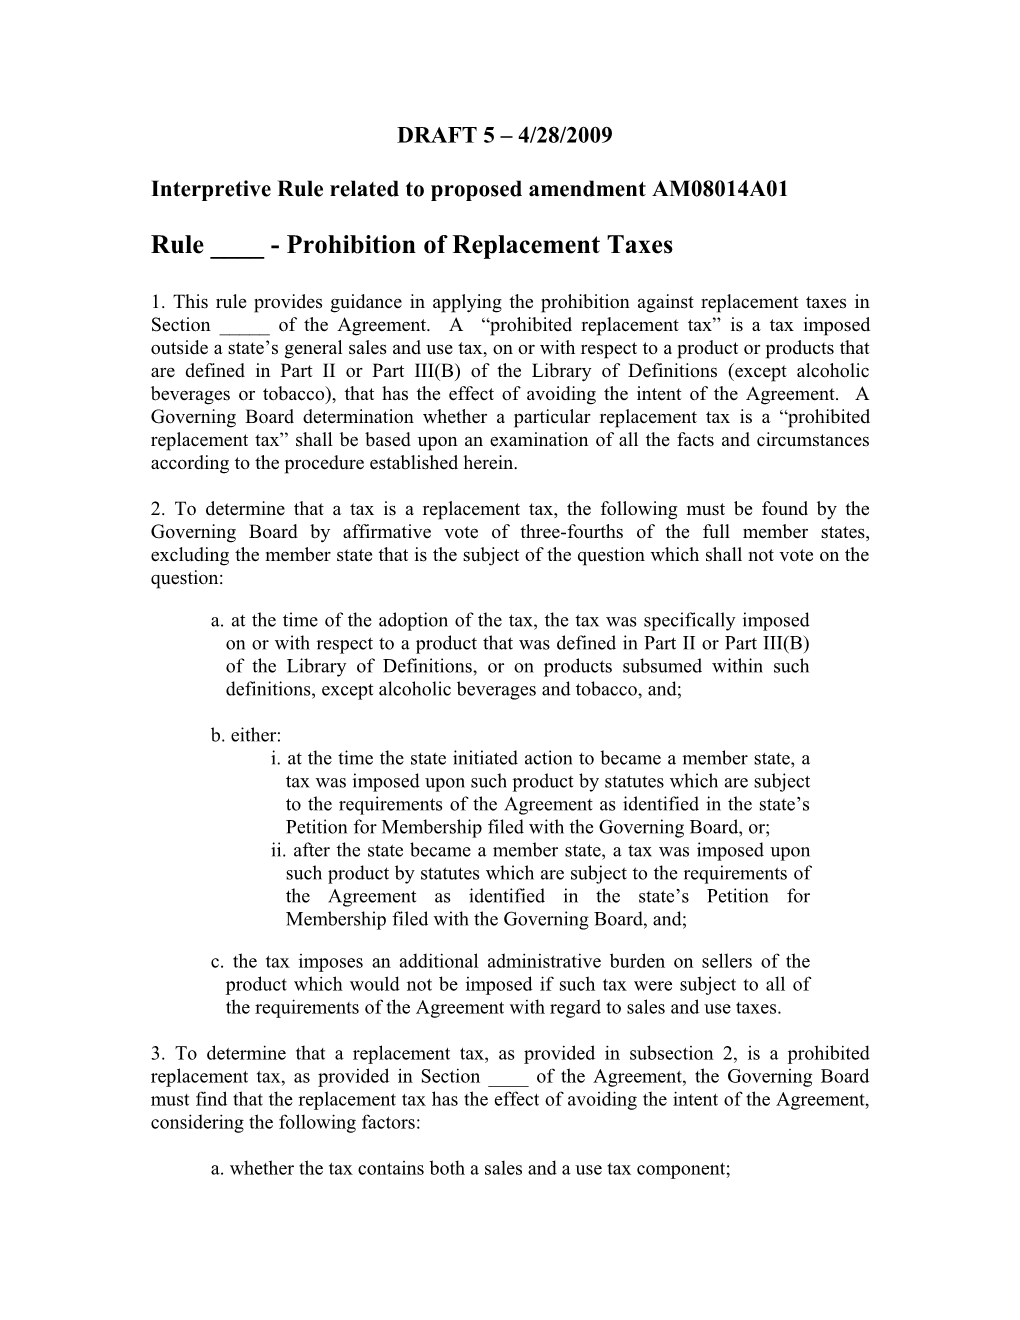 Interpretive Rule Related to Proposed Amendment AM08014A01